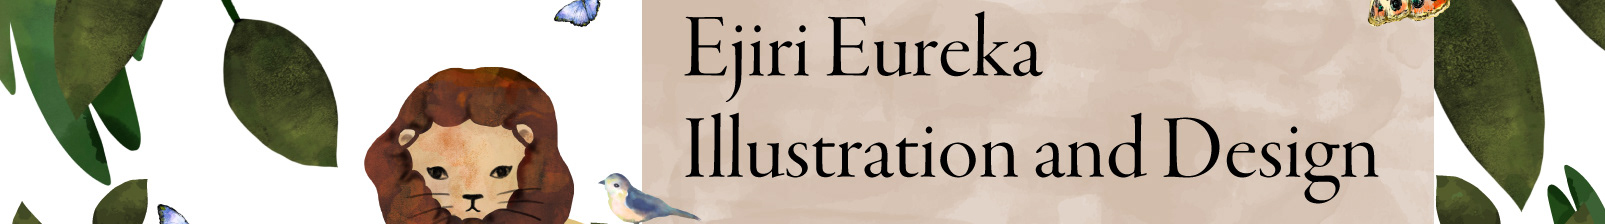 Eureka Ejiri's profile banner